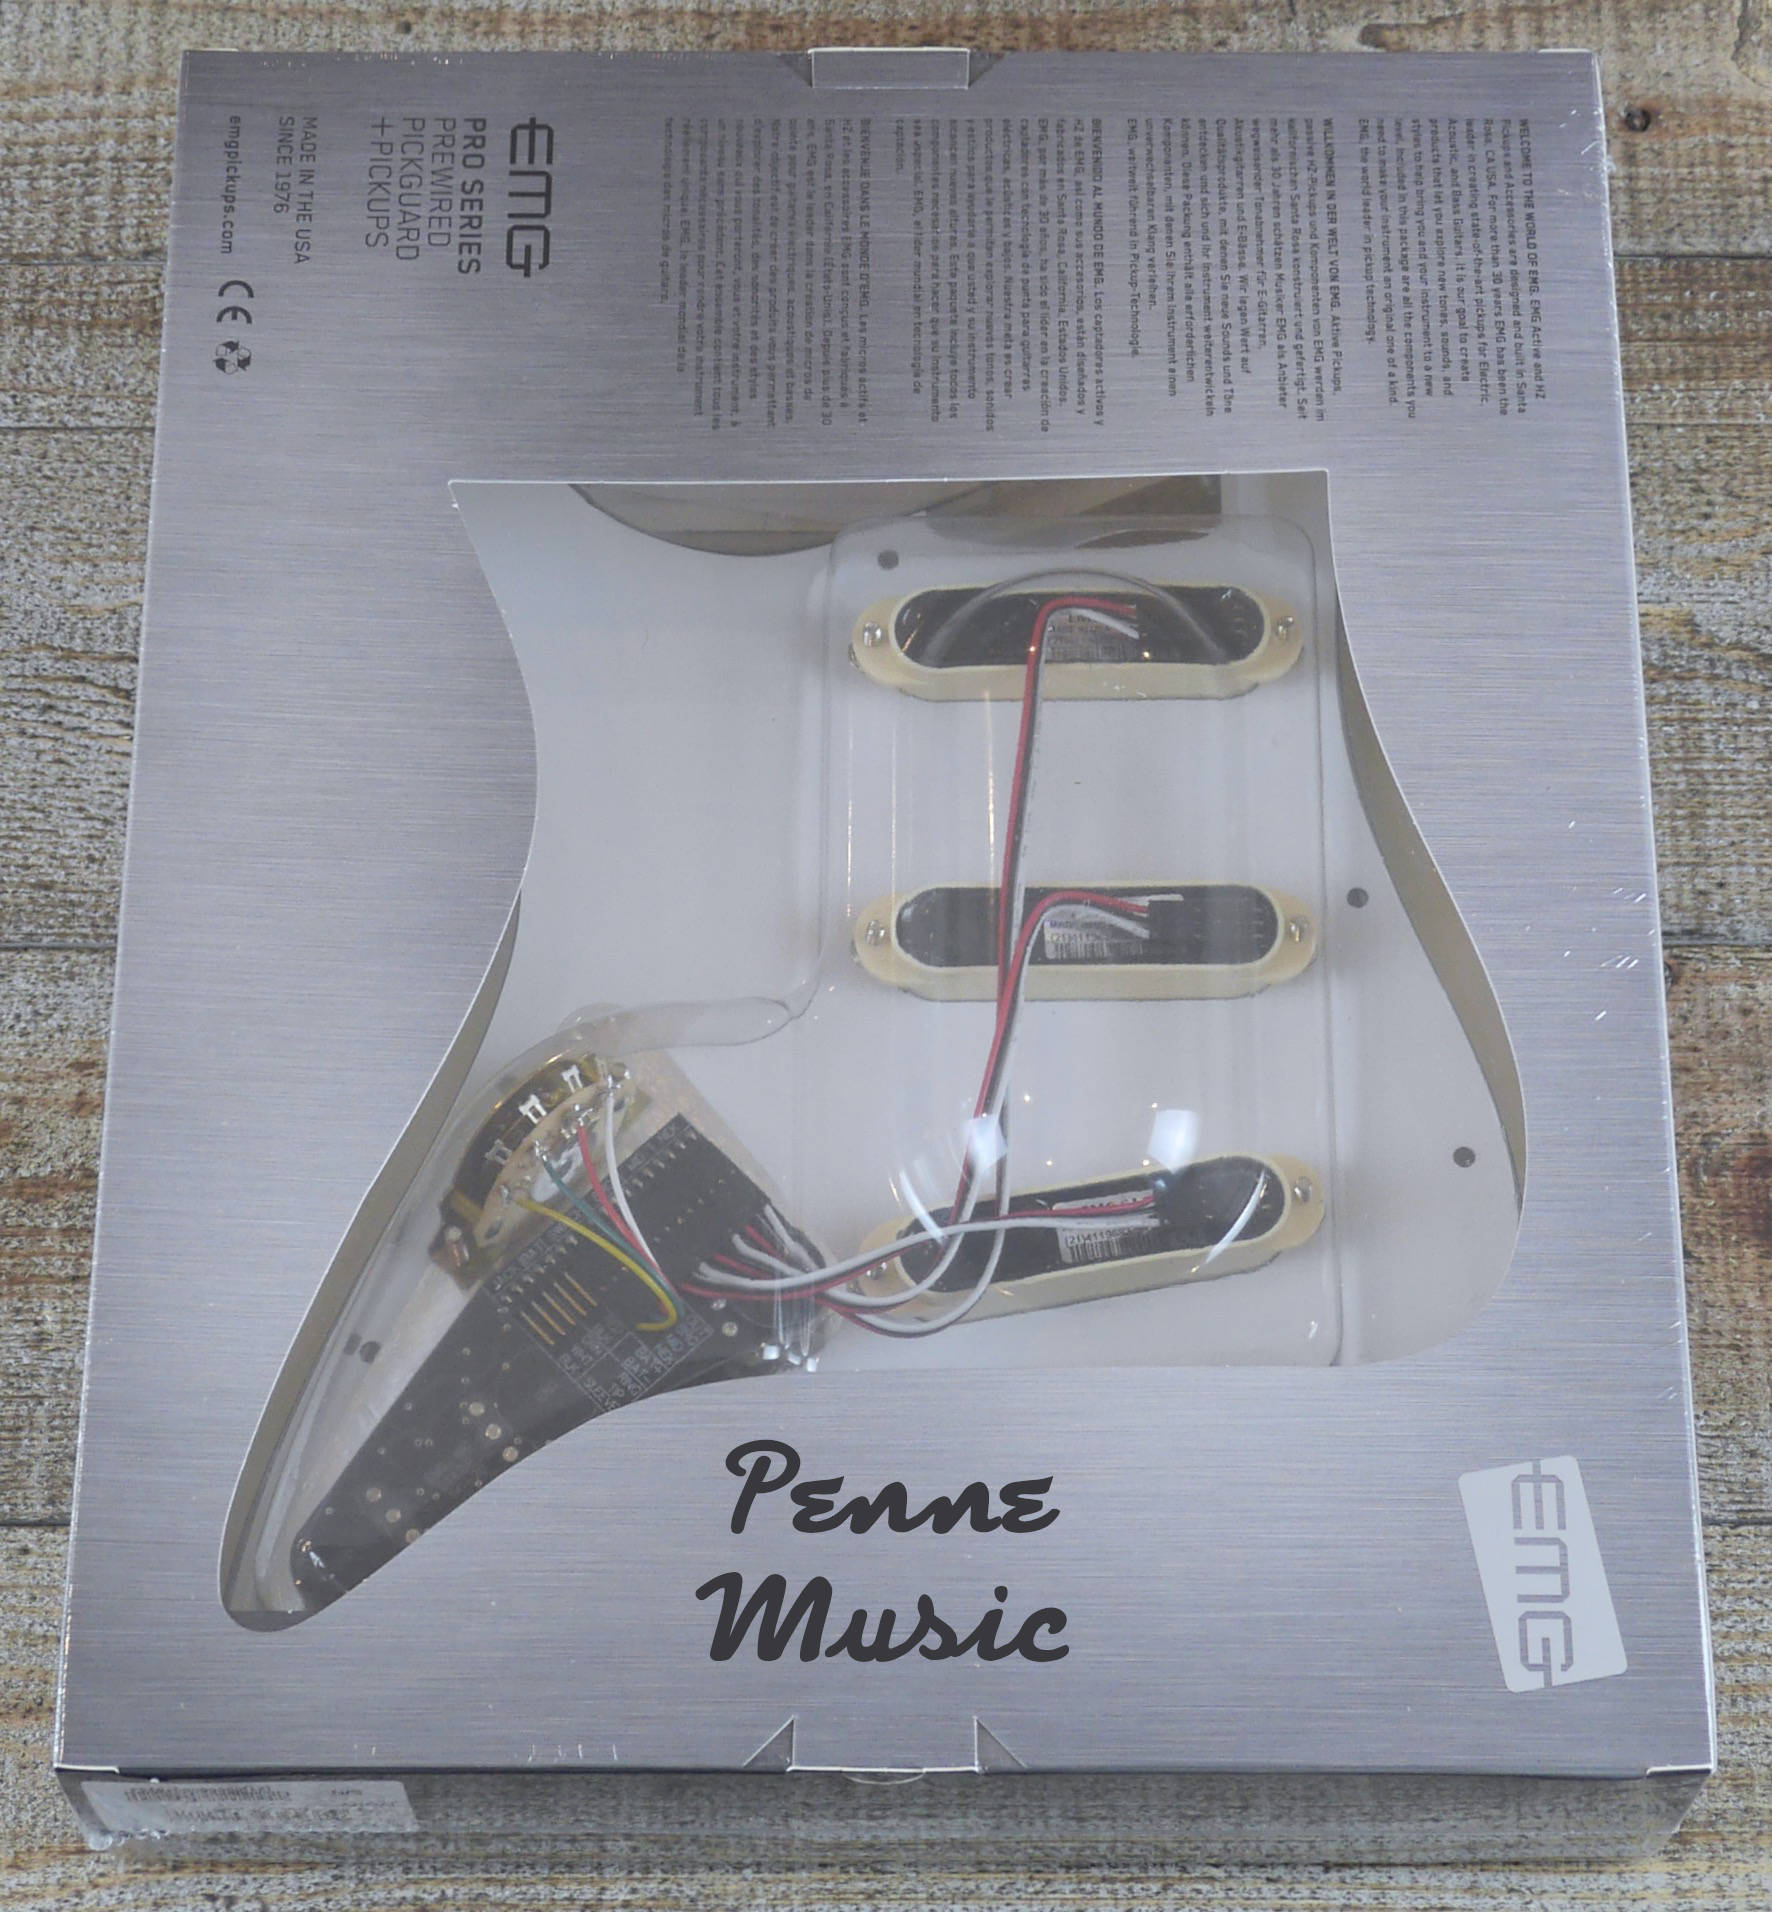 EMG Pre-Wired DG20 David Gilmour Stratocaster Pickup Set White Pearl 2